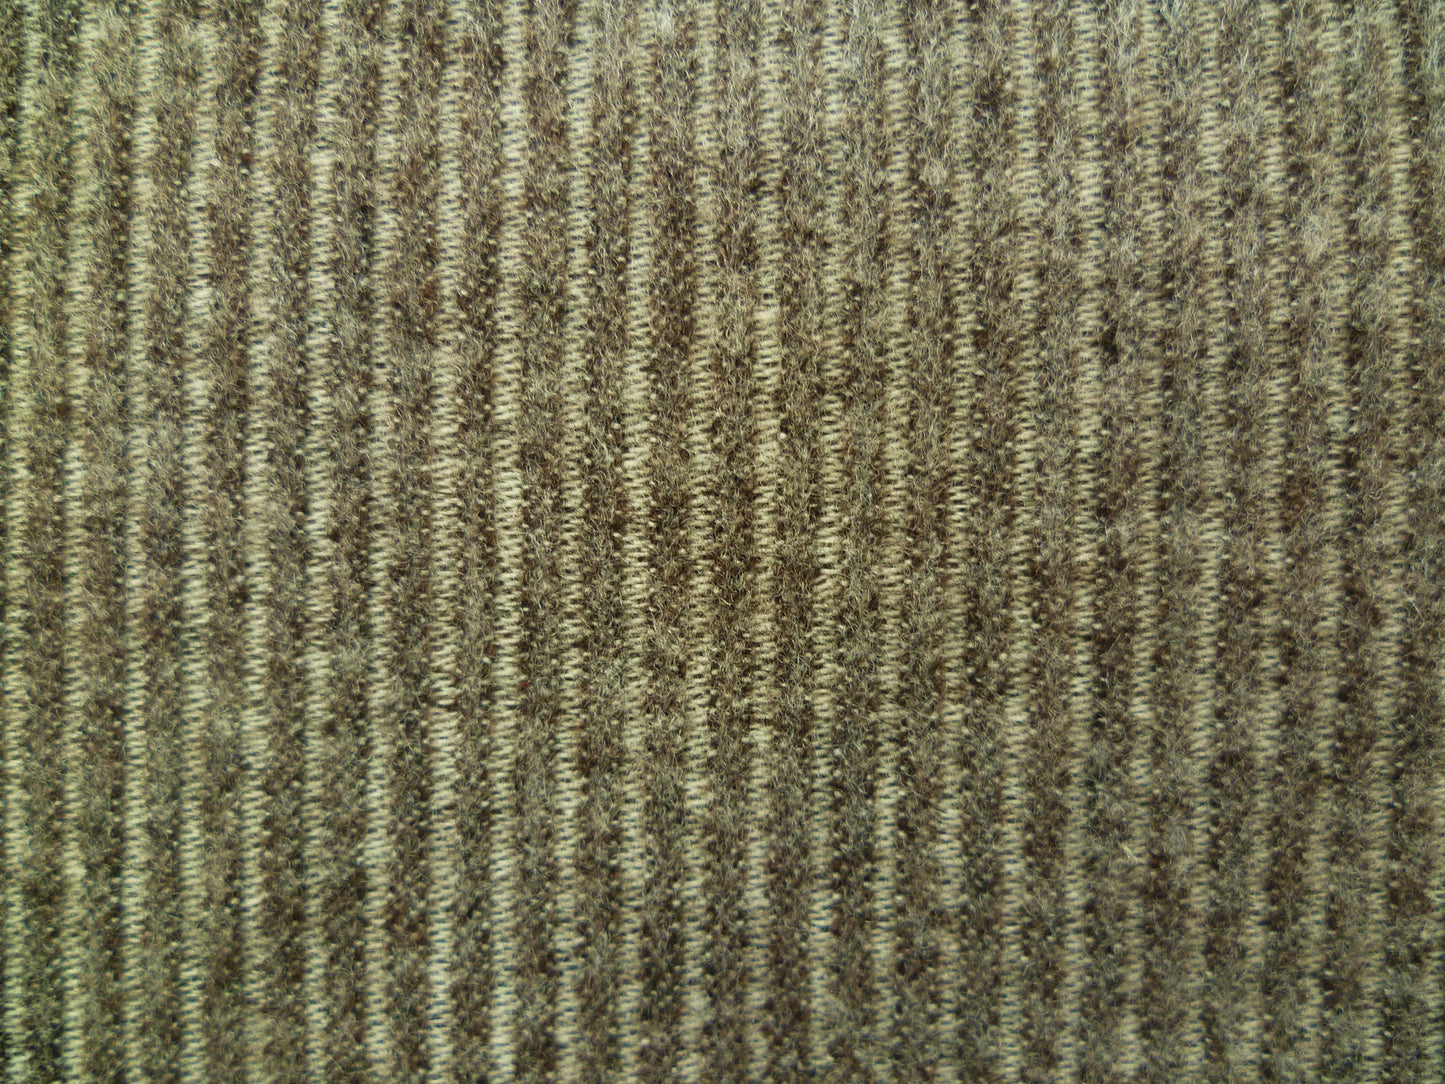 Minx Bedford Cord Wool